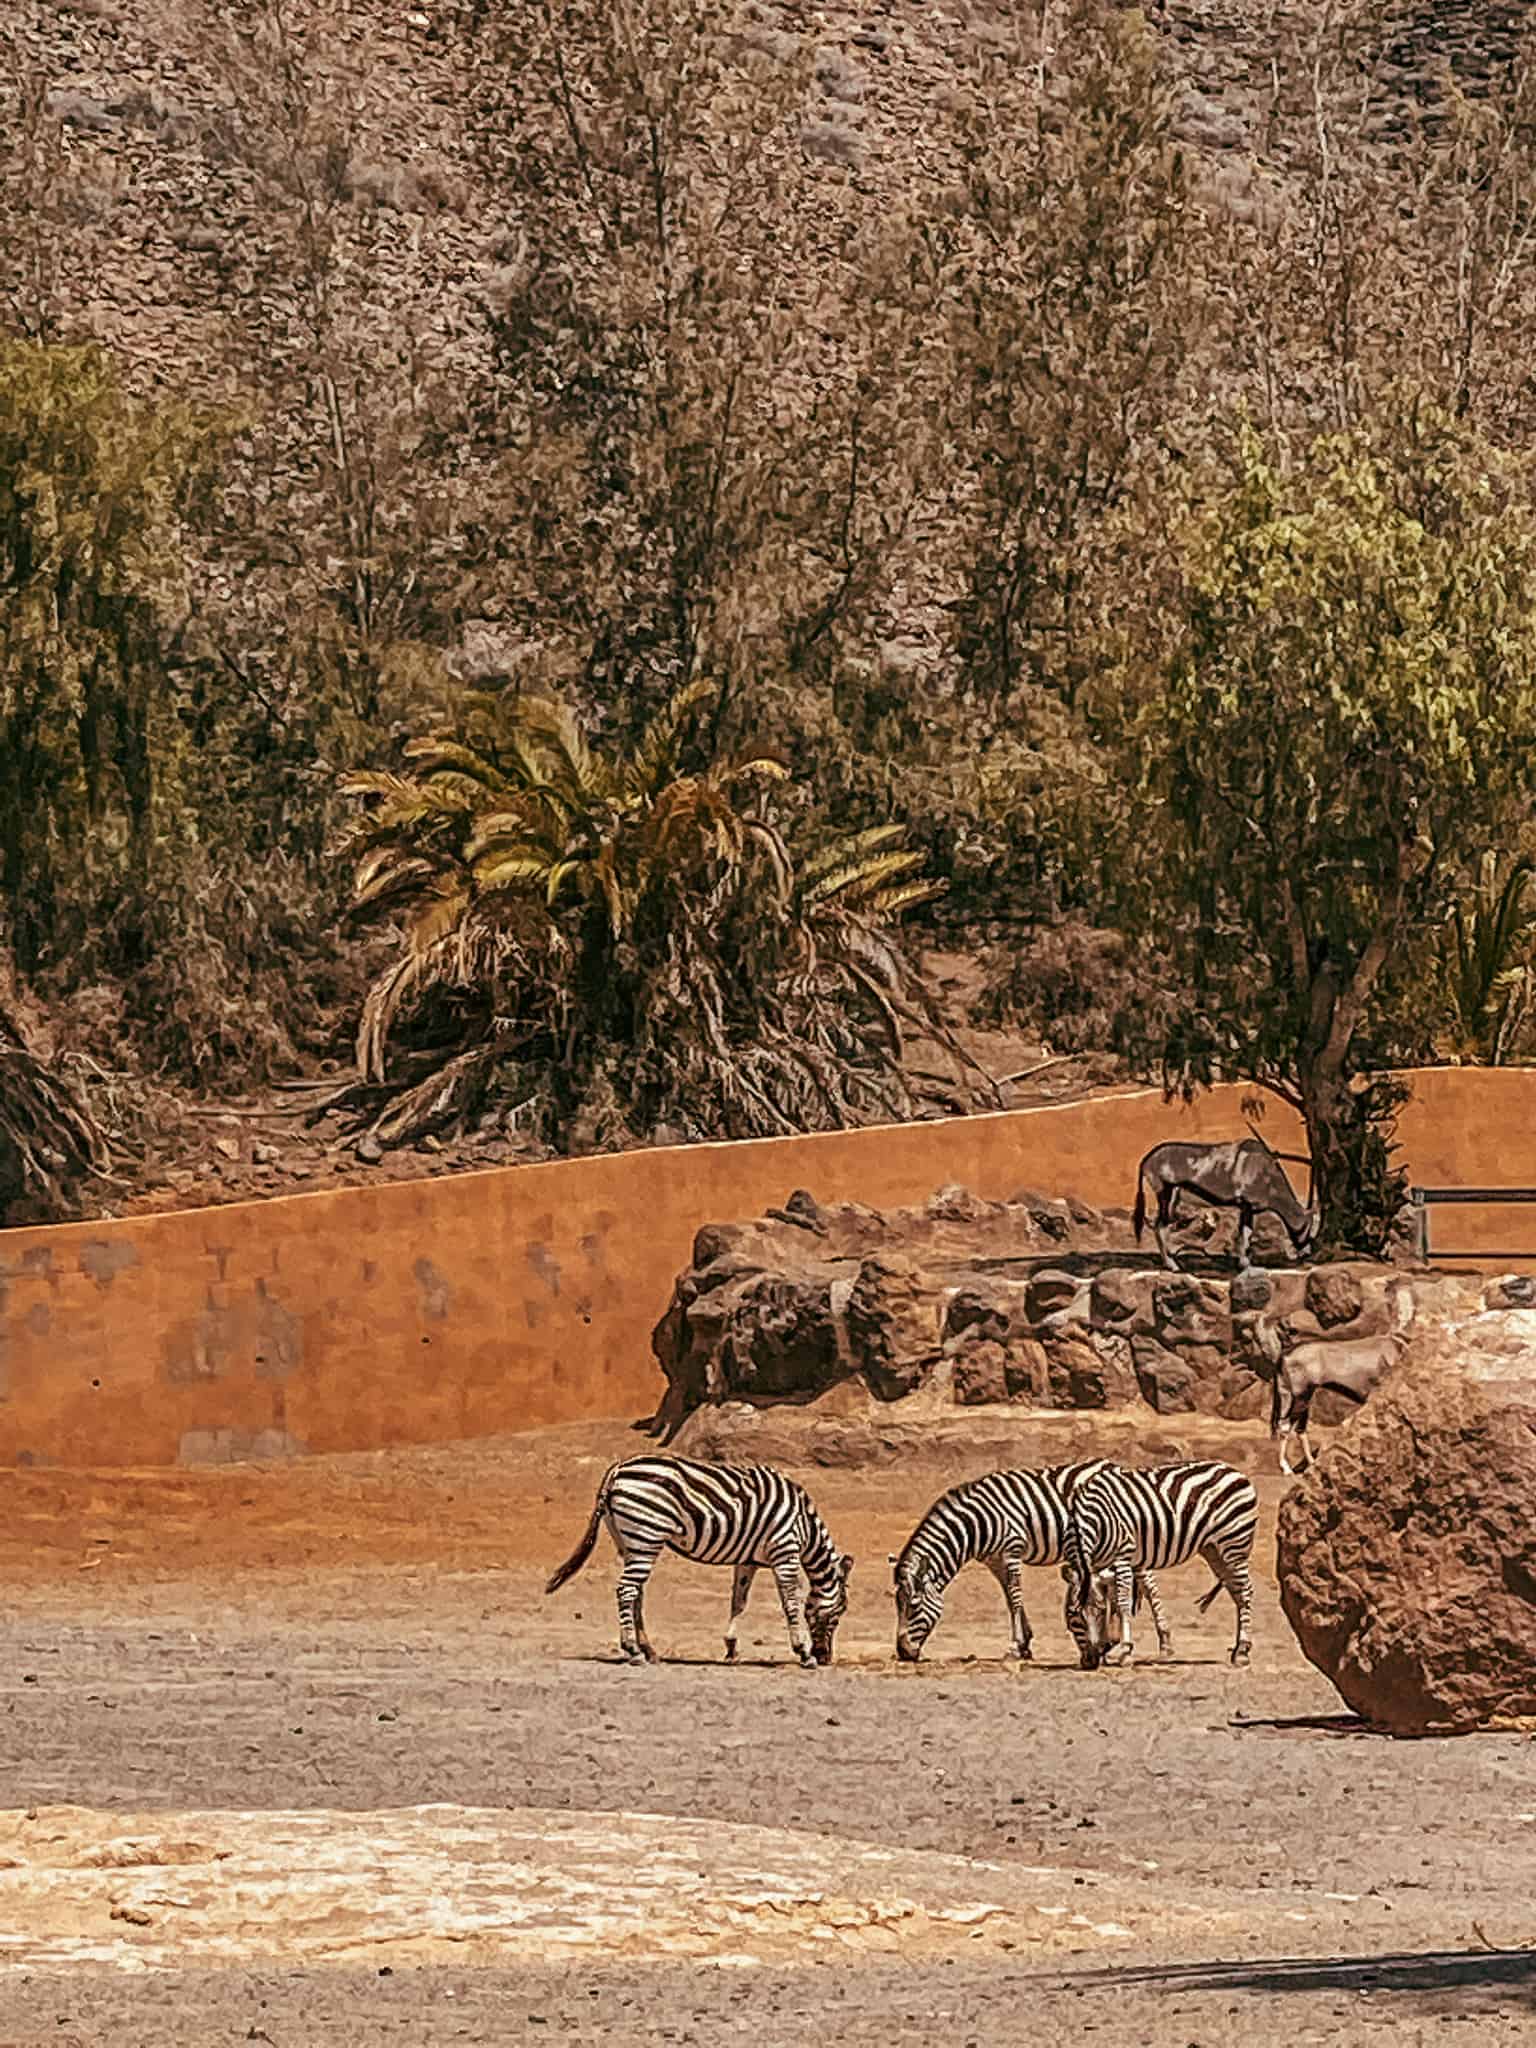 Oasis Wildpark Zoo parkas